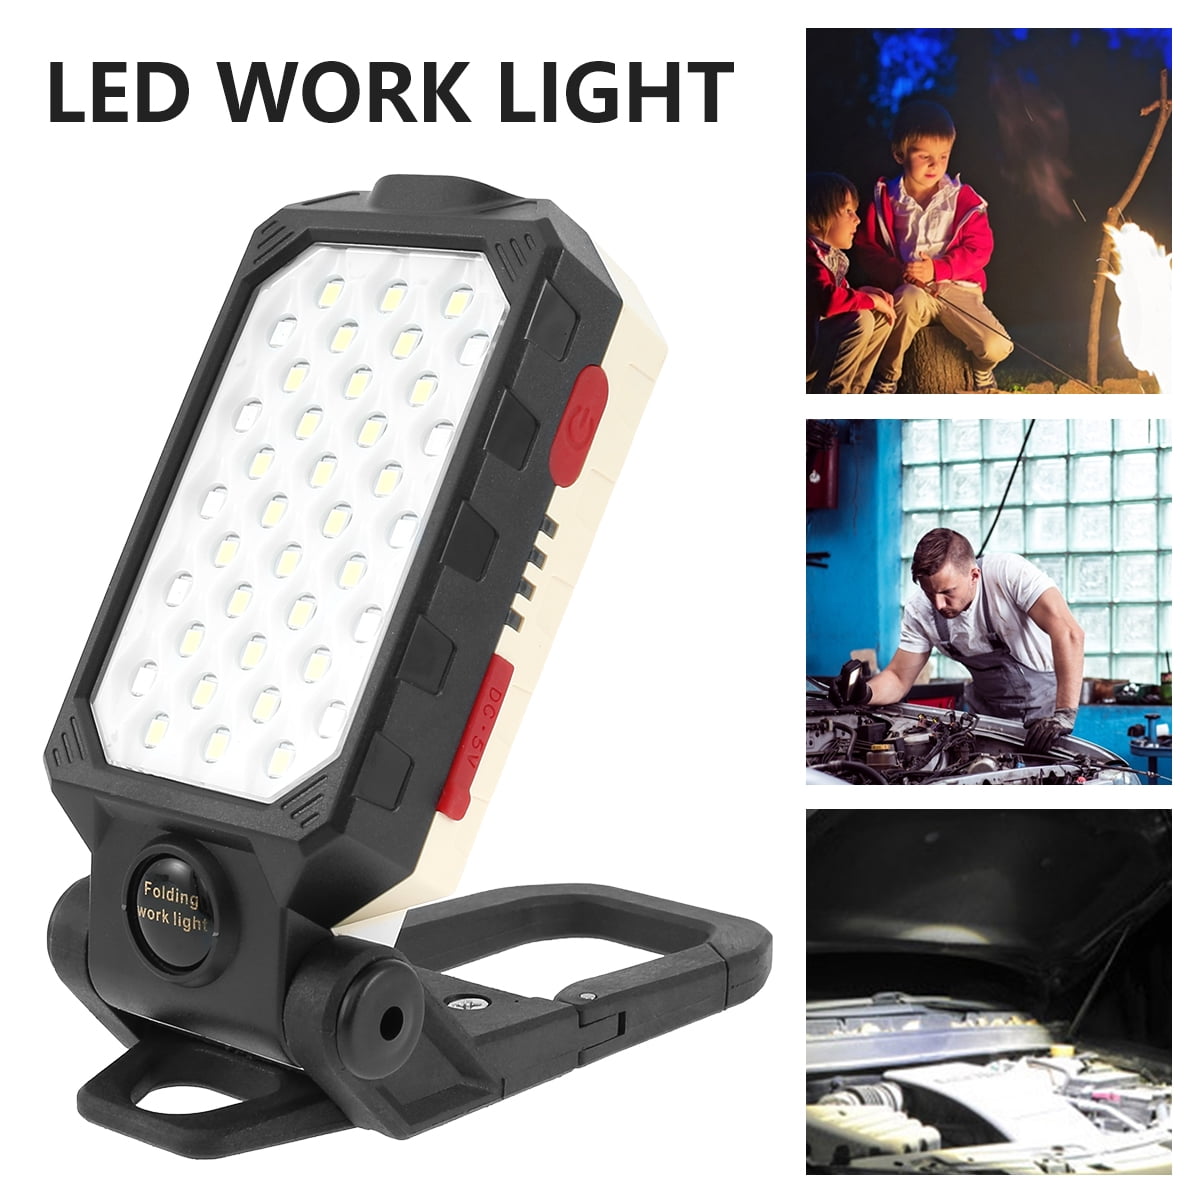 Workshop LED rechargable light 